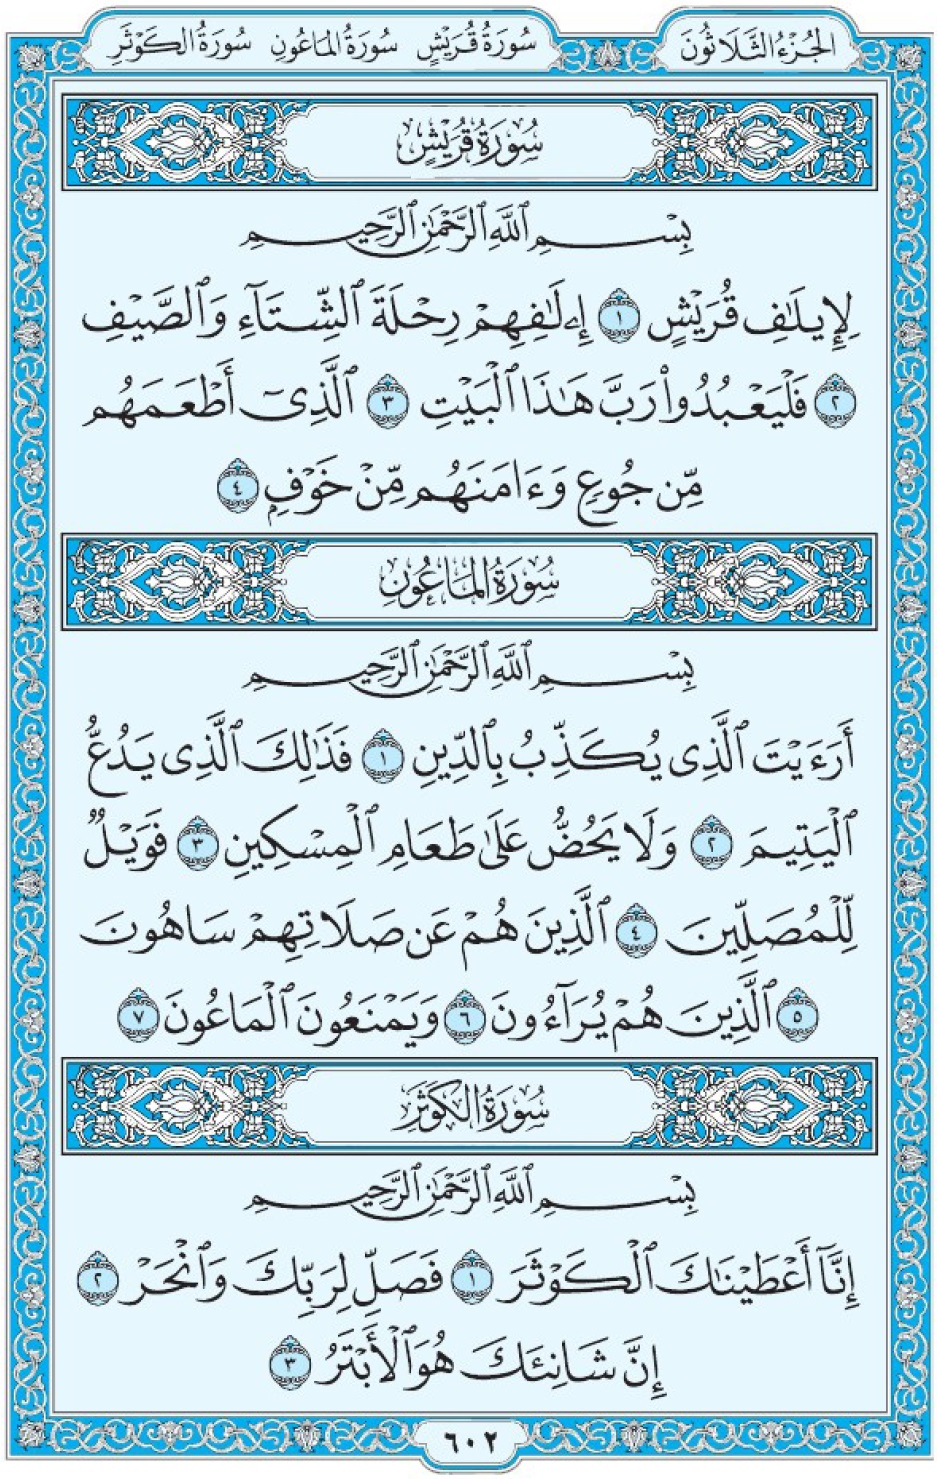 Коран Мединский мусхаф страница 602, суры Курайш, аль-Маун, аль-Кяусар, سورة قريش الماعون الكوثر 